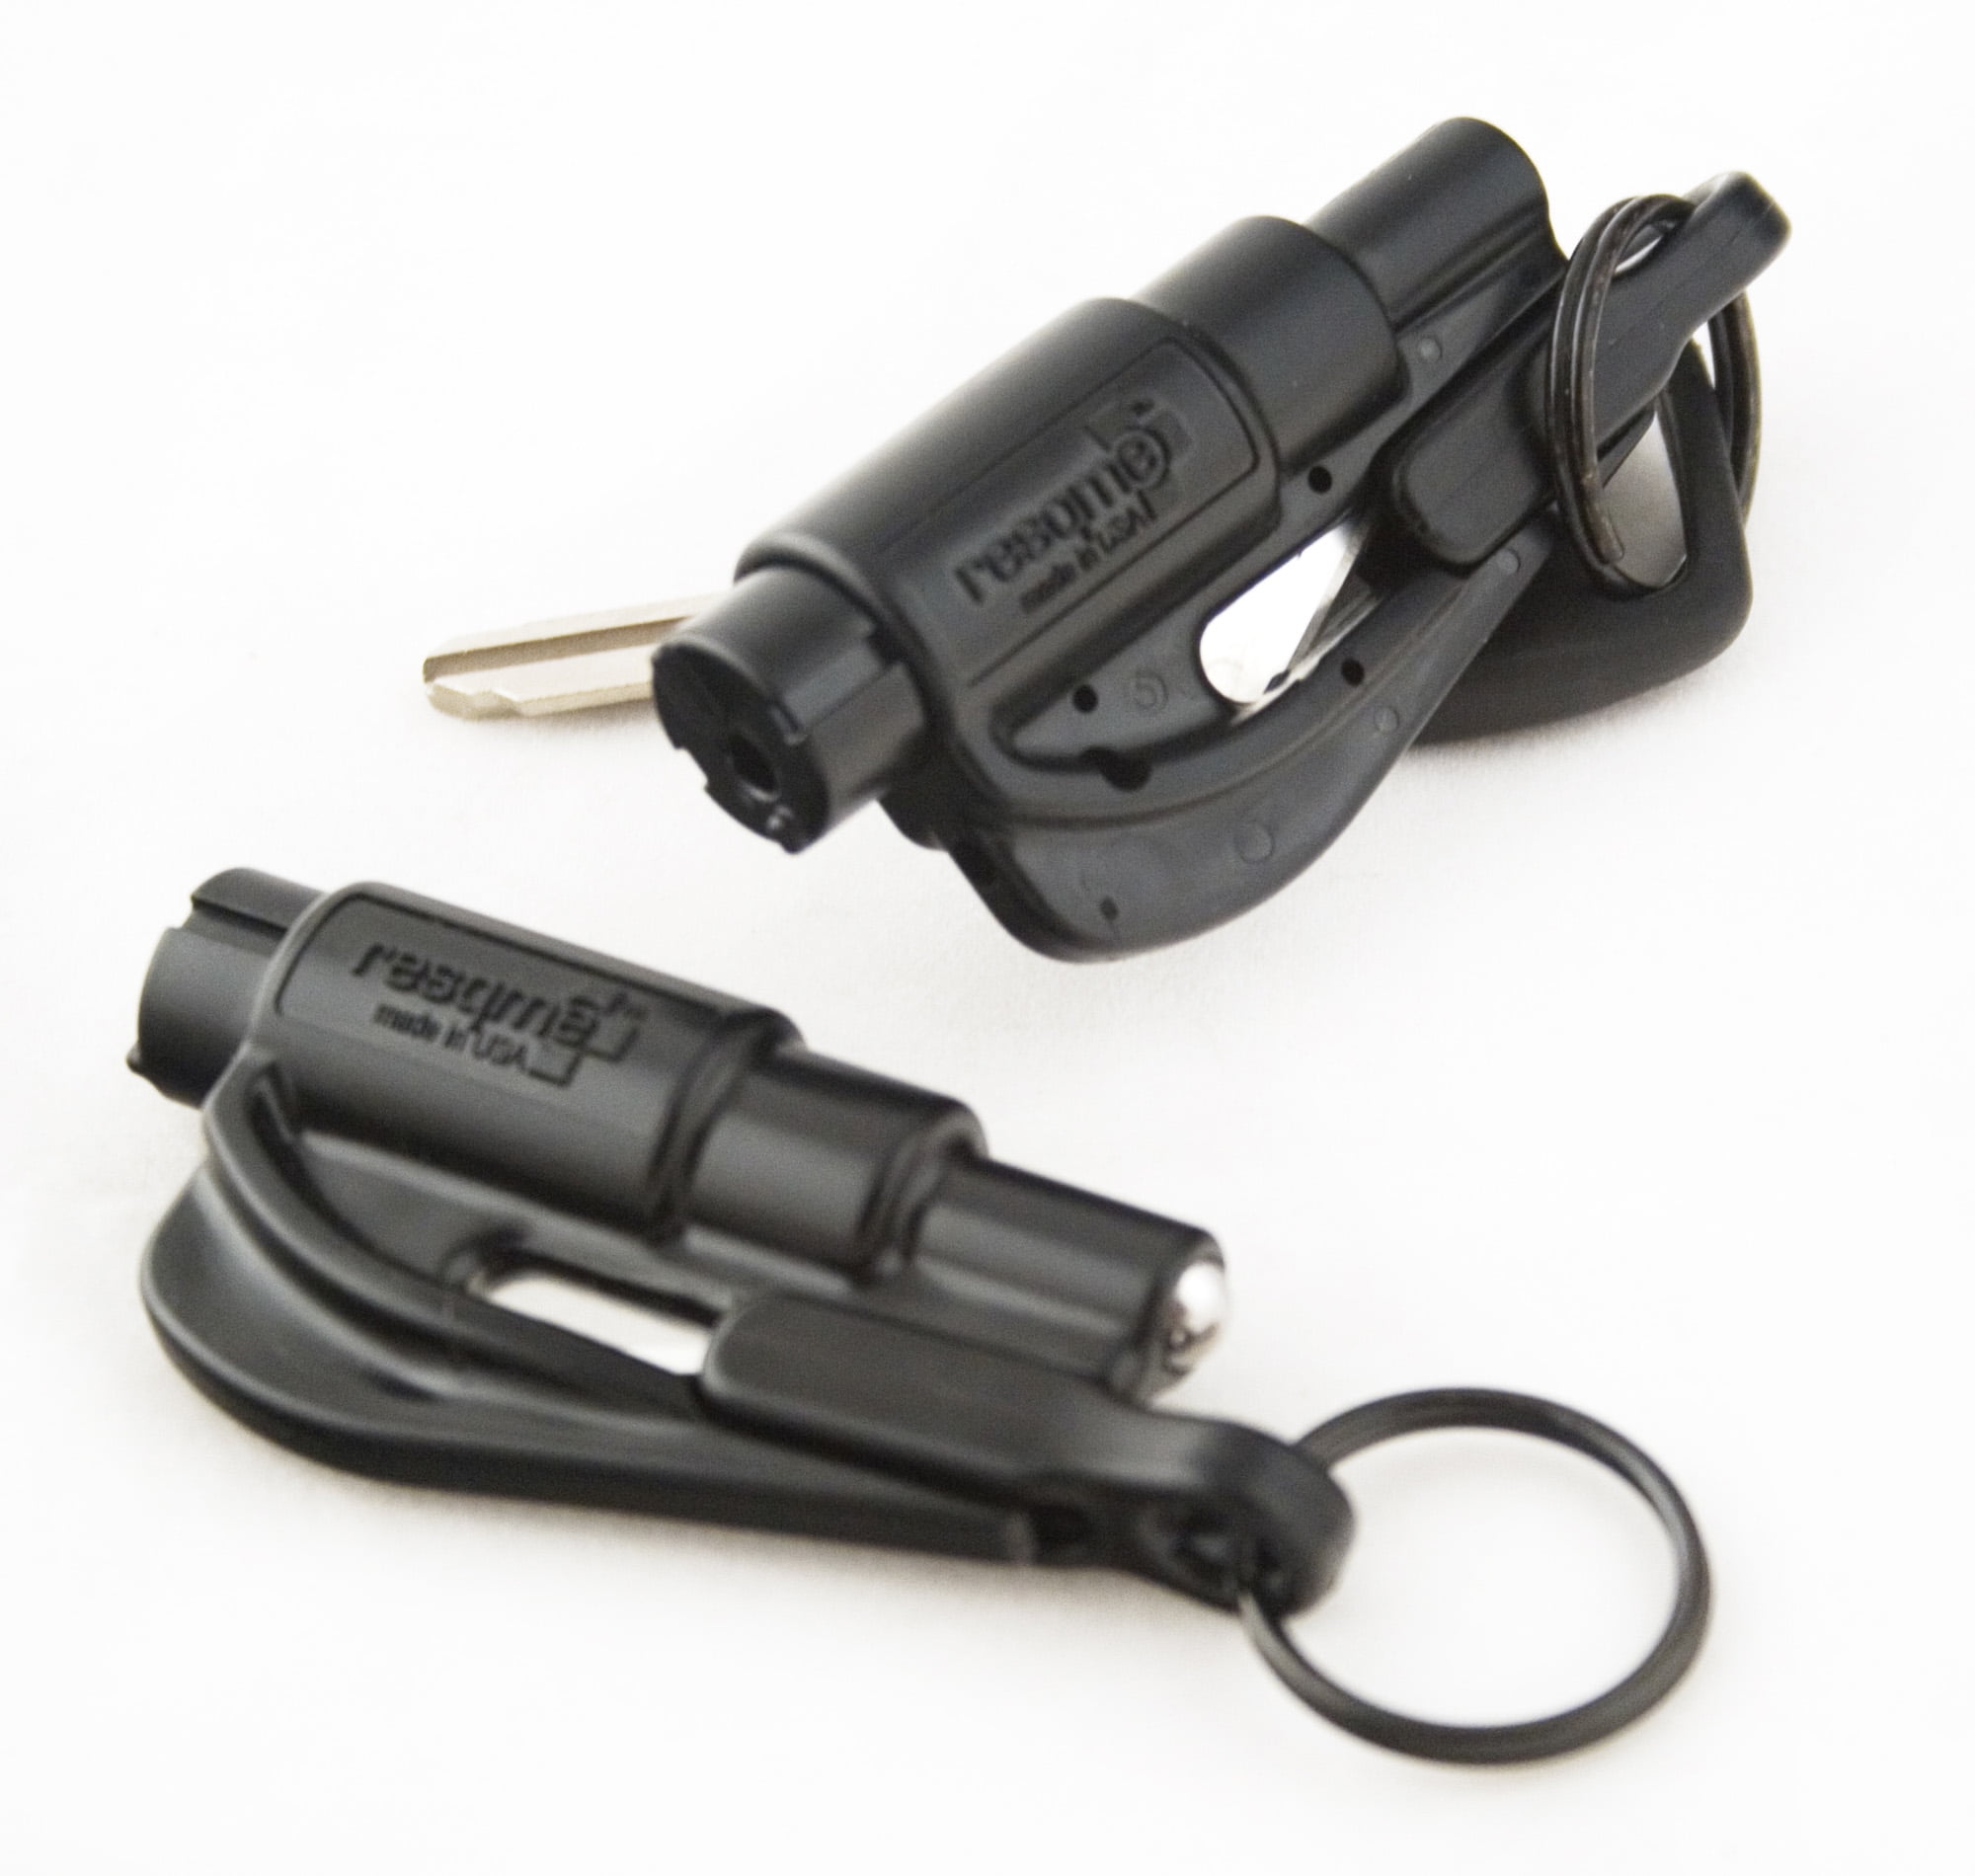 resqme Original Emergency Keychain Car Escape Tool, 2-in-1 Seatbelt Cutter  and Window Breaker, Black, Pack of 2